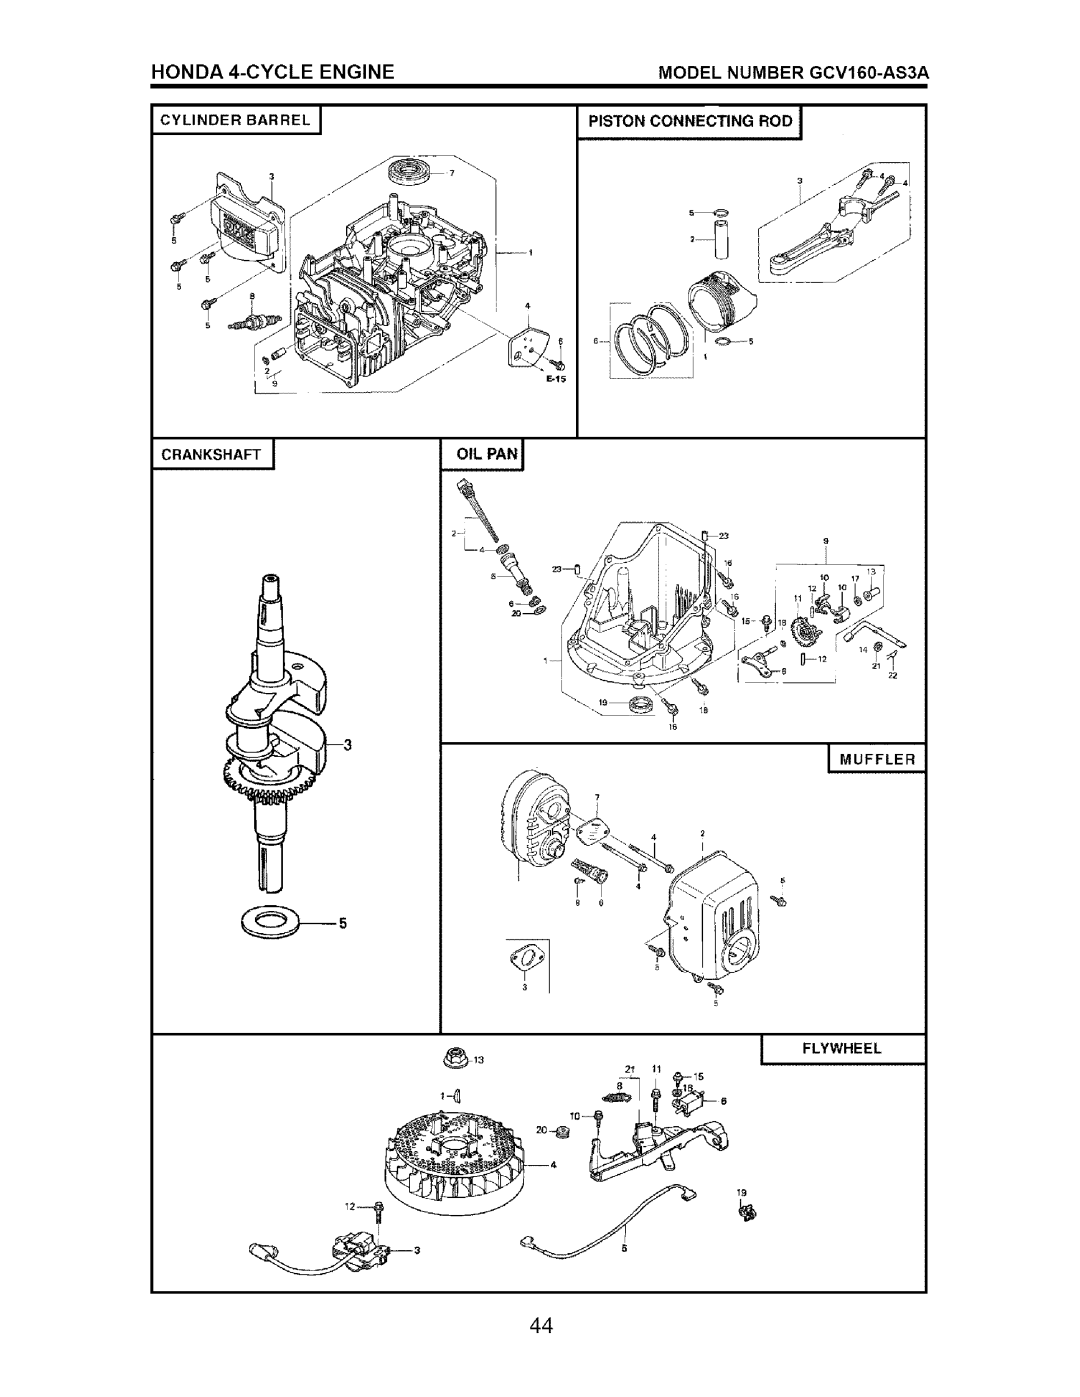 Craftsman 917.37172 owner manual i_ _-i, HONDA 4-CYCLE ENGINE, MODEL NUMBER GCV160-AS3A, Crankshaft, L Muffler, Flywheel 